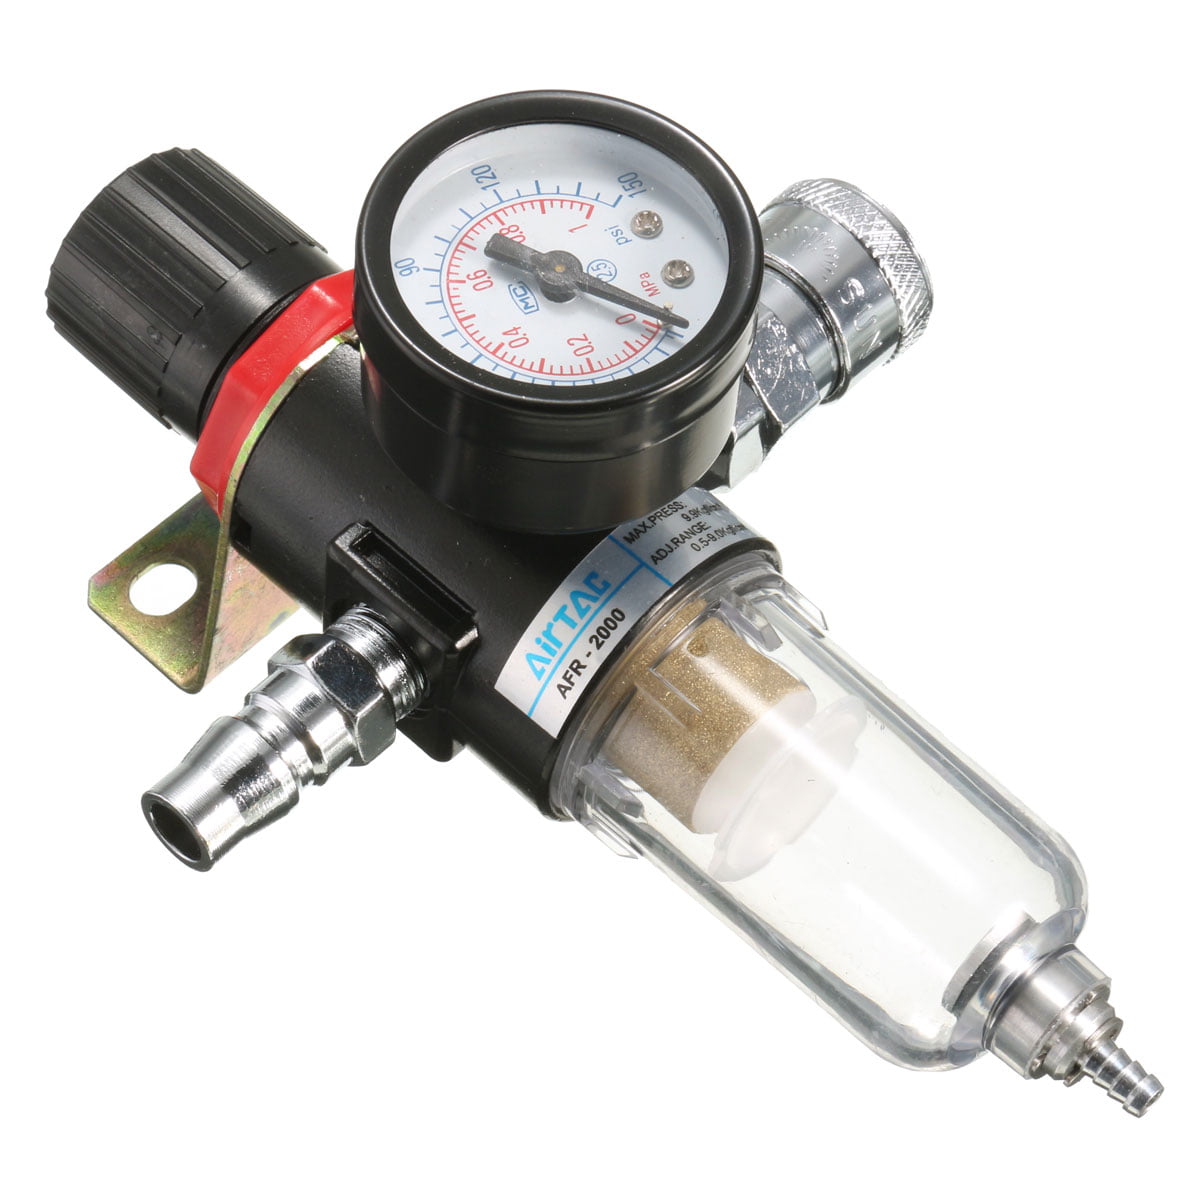 Air compressor filter Separator Oil Pressure Gauge Airbrush Accessories 